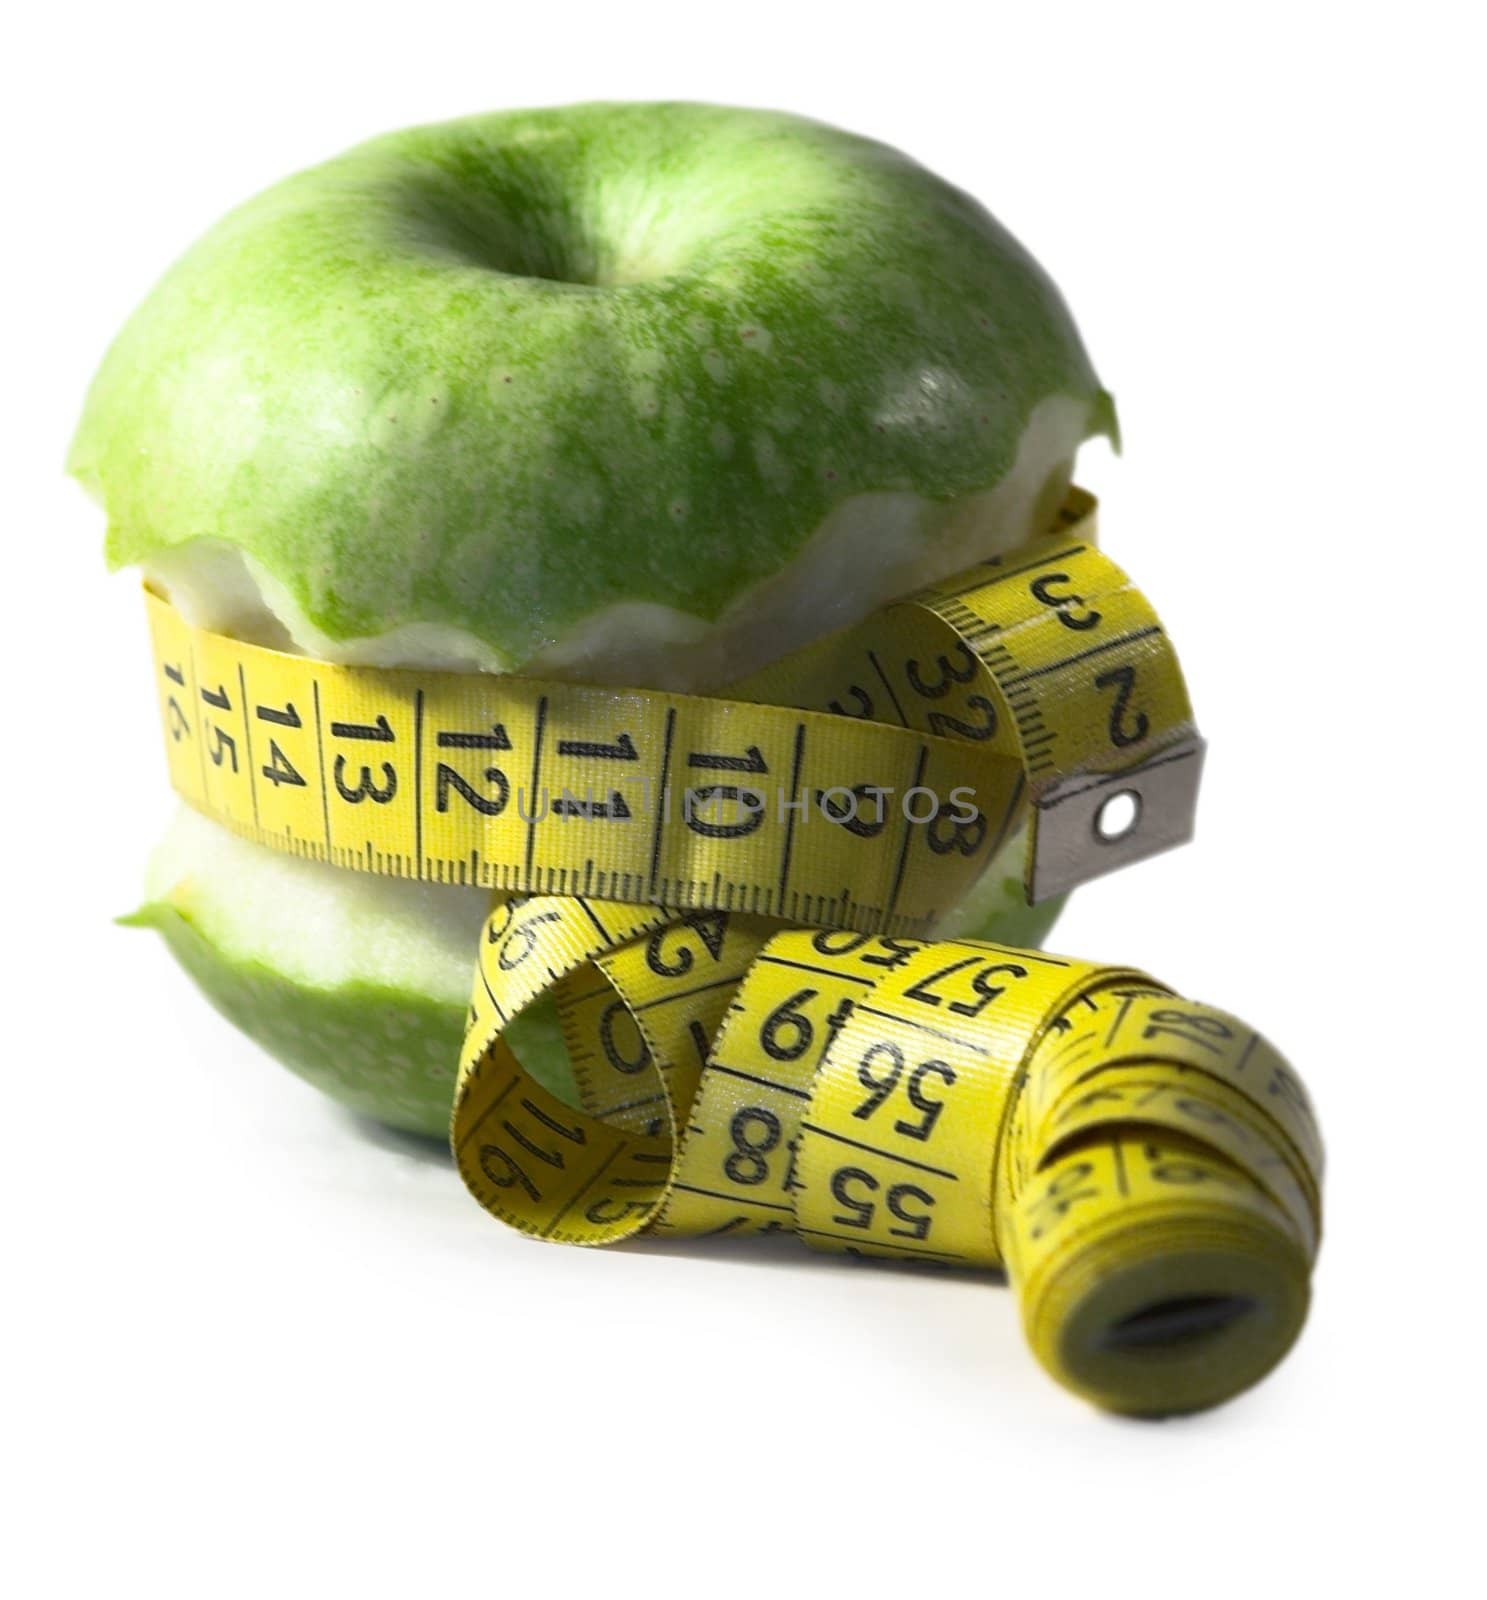 apple, autumn, centimeter, centimetre, diet, drew, drop, eat, fall, fruit, green, measure, vitamin, water, yellow, 